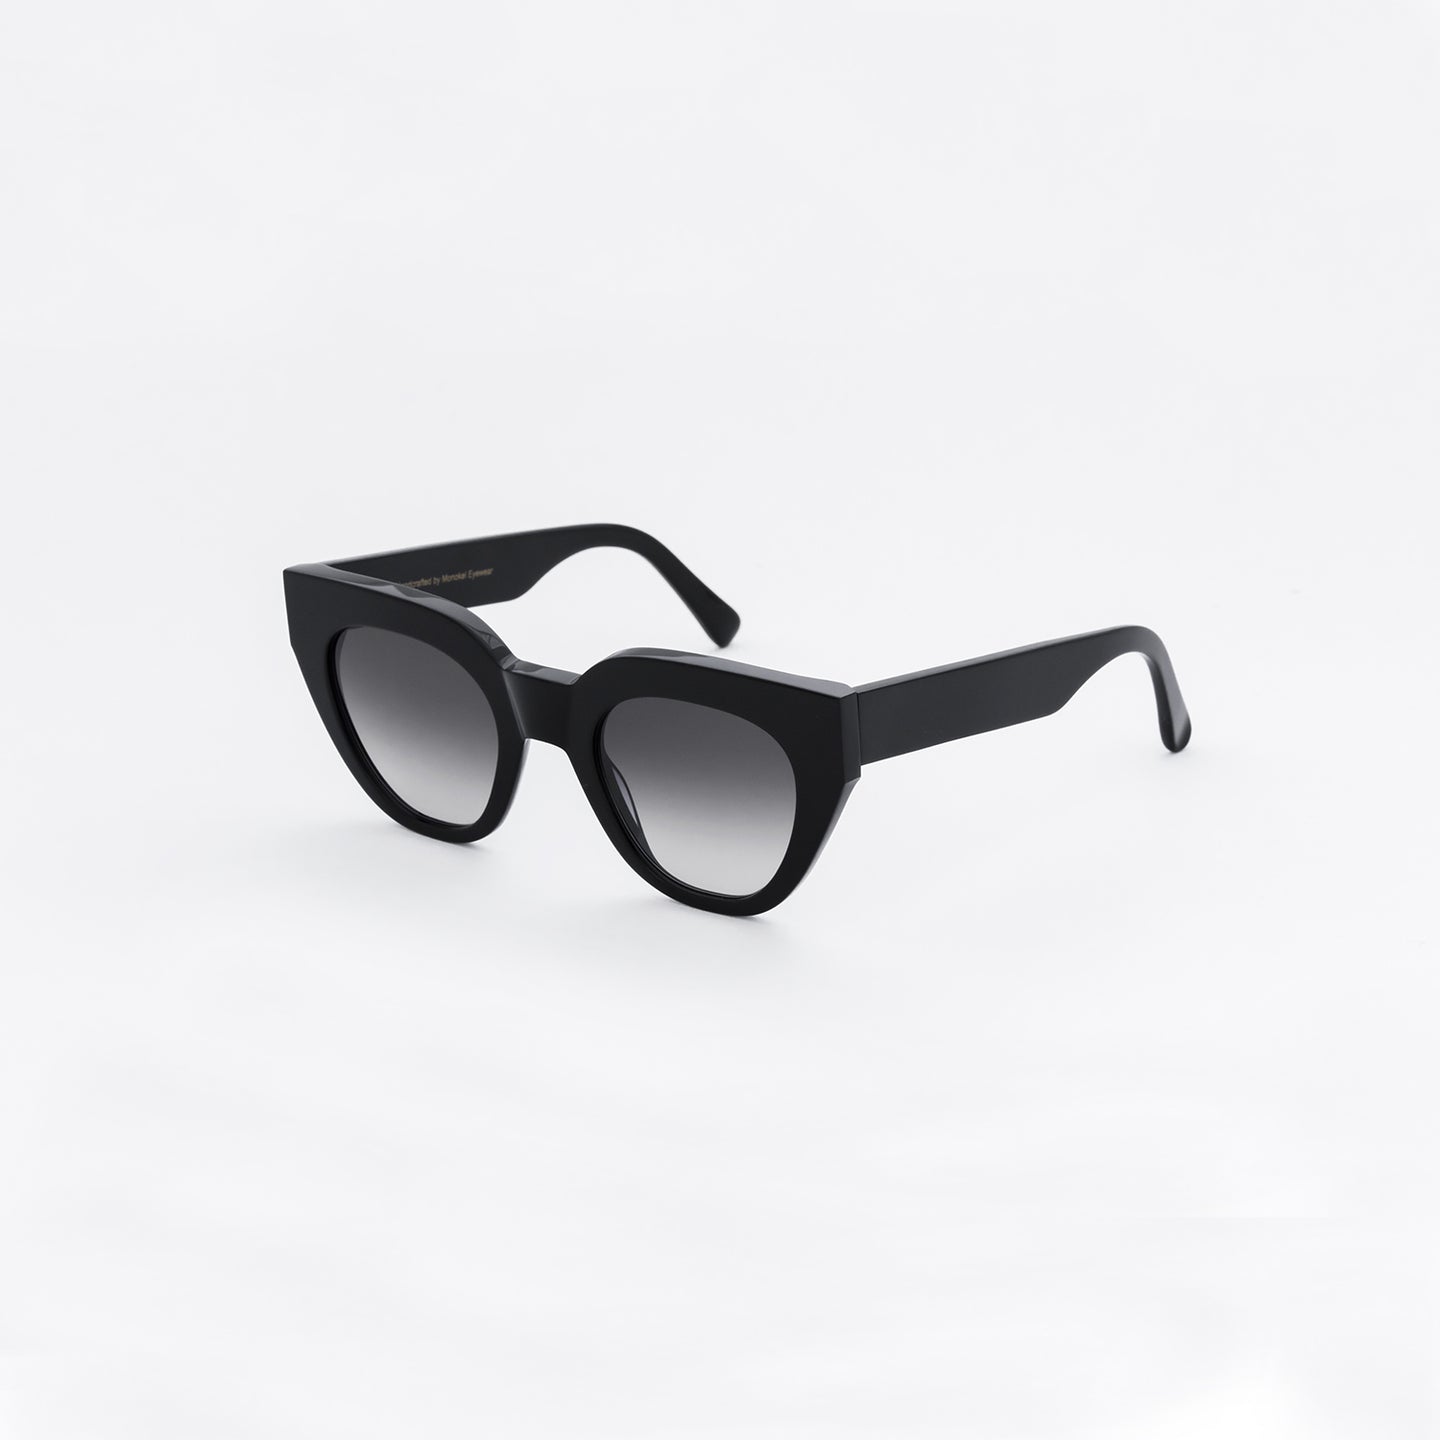 sunglasses MONOKEL model HILMA color BLACK